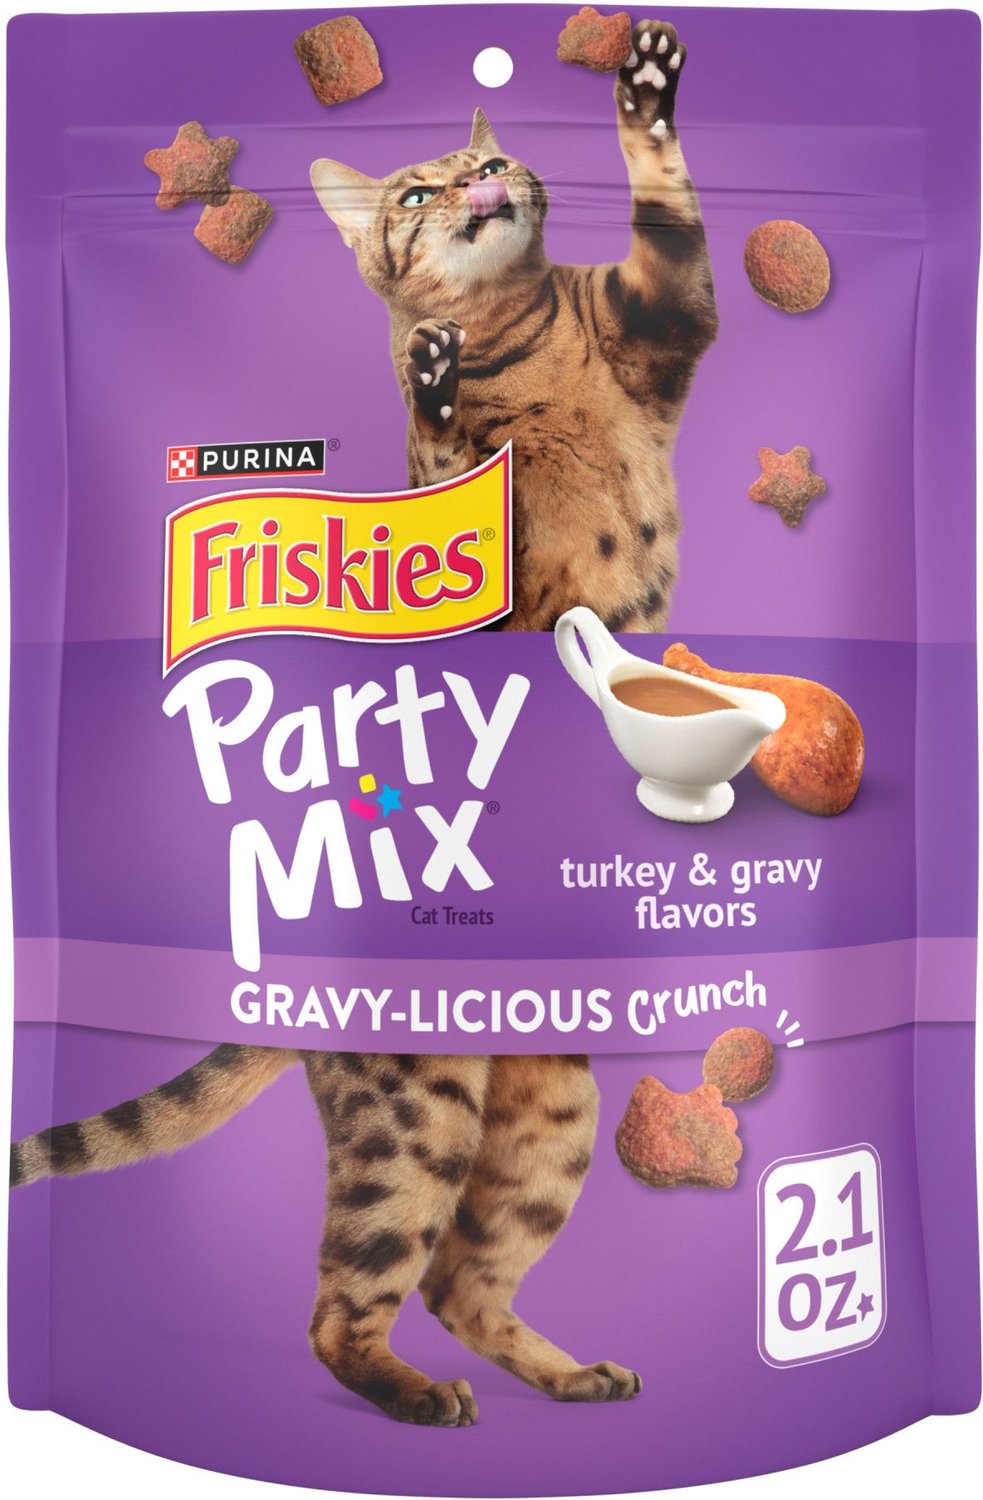 Friskies Party Mix Crunch Gravylicious Turkey & Gravy Flavors Cat